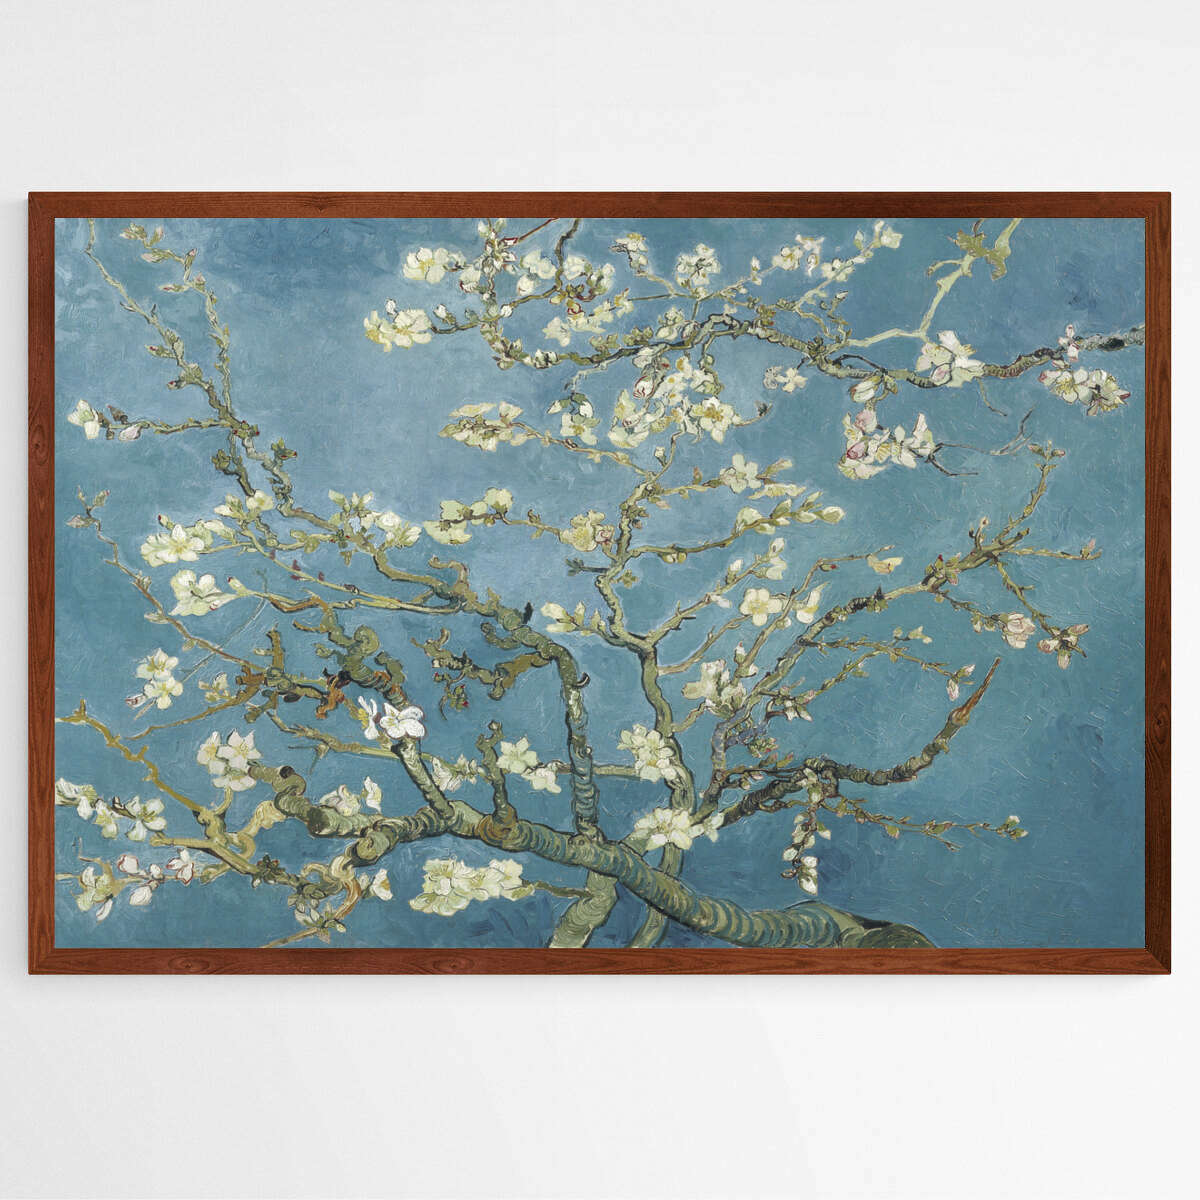 Almond blossom by Vincent Van Gogh | Vincent Van Gogh Wall Art Prints - The Canvas Hive